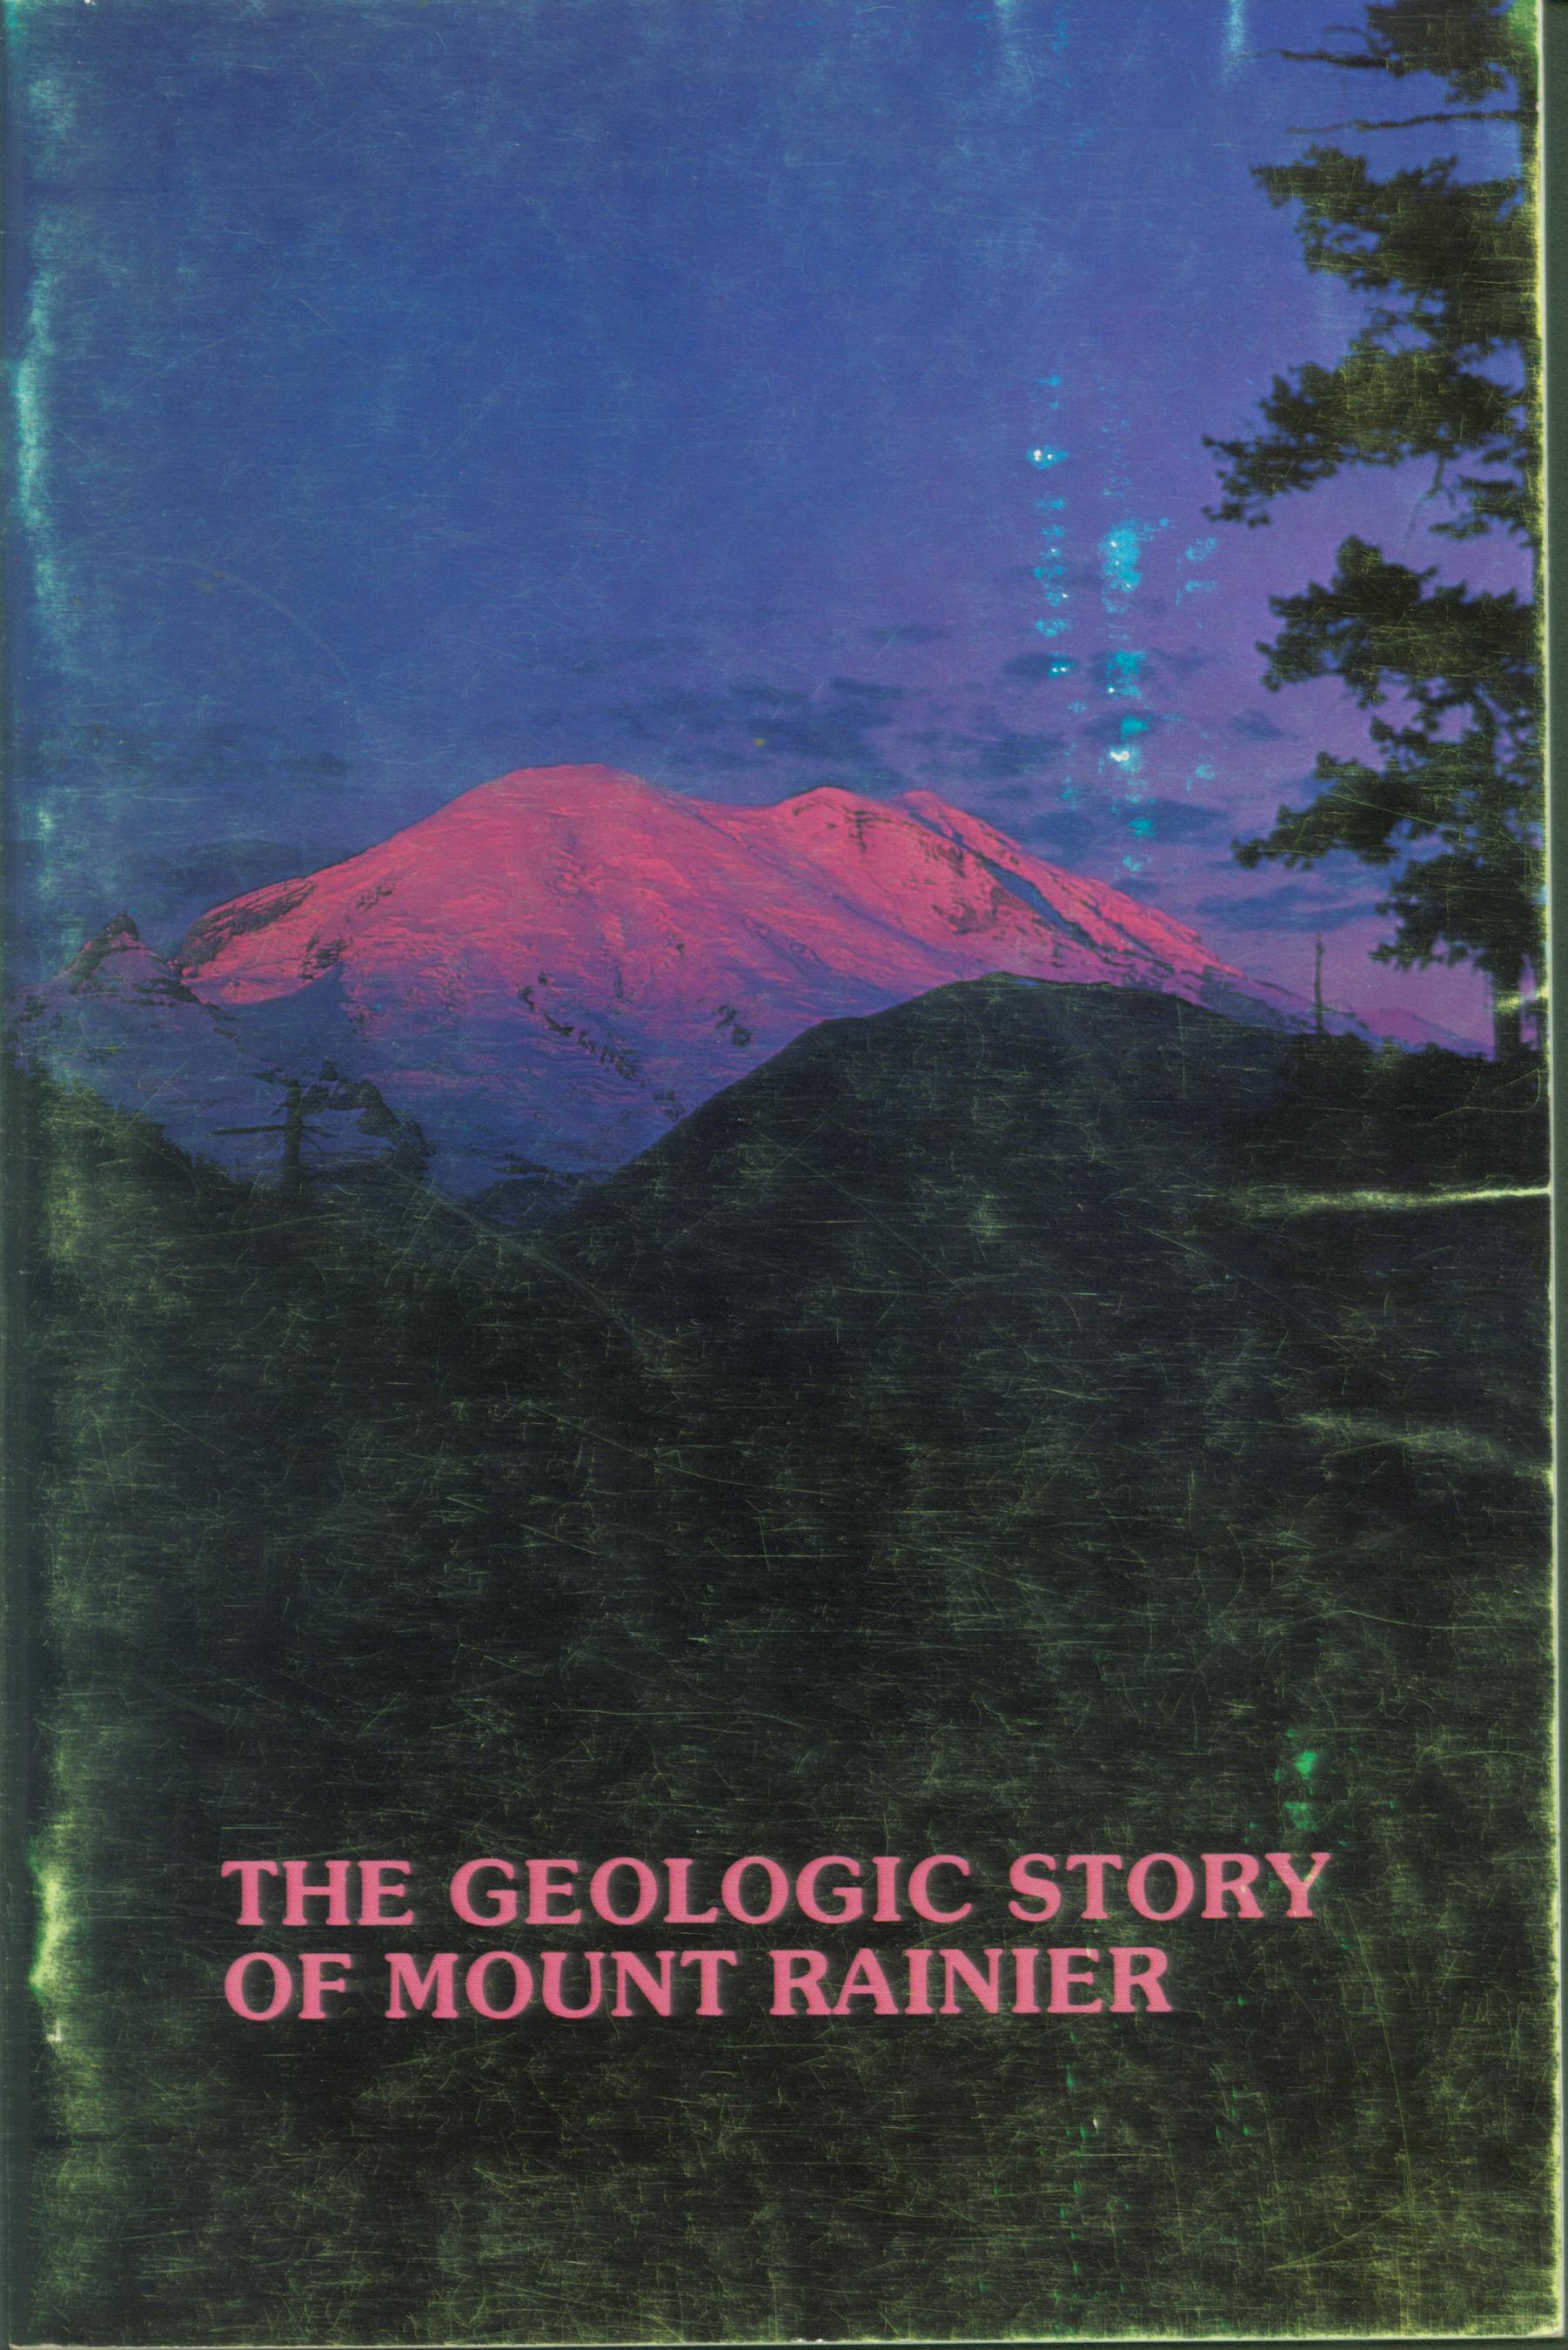 THE GEOLOGIC STORY OF MOUNT RAINIER. 